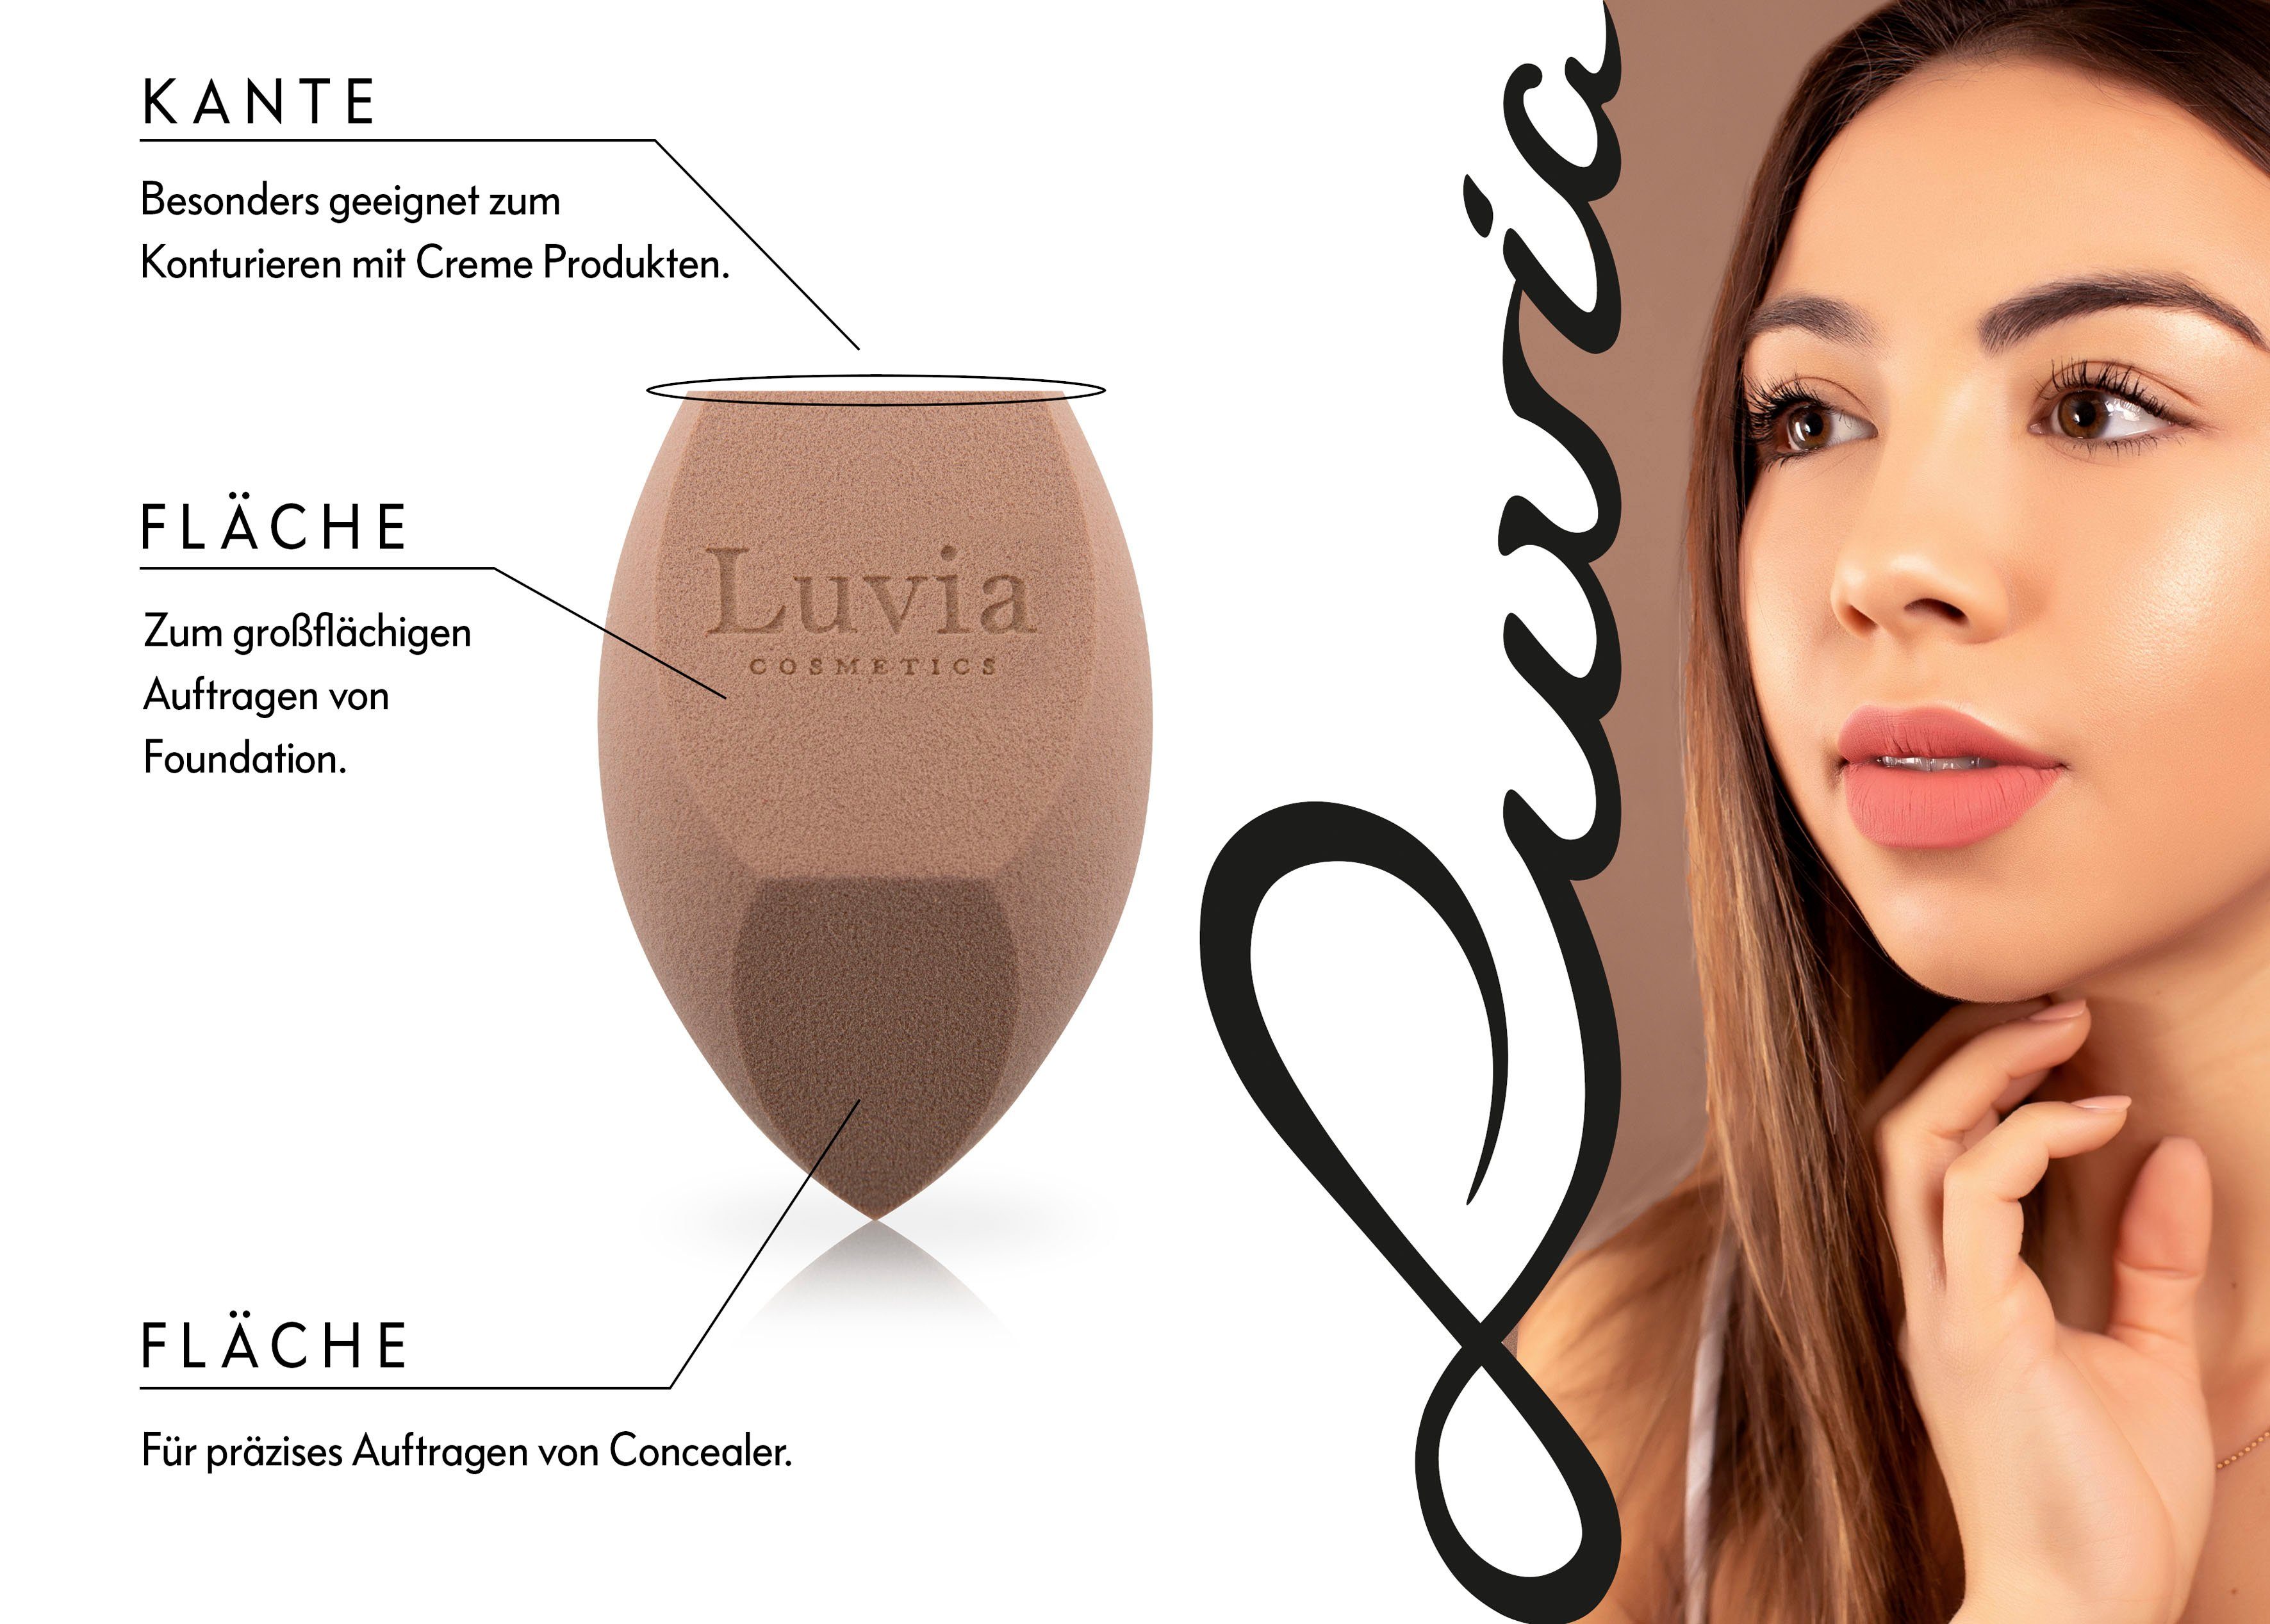 Luvia Cosmetics Make-up Sponge, Schwamm Body Schwamm Prime Vegan XXL Make-up